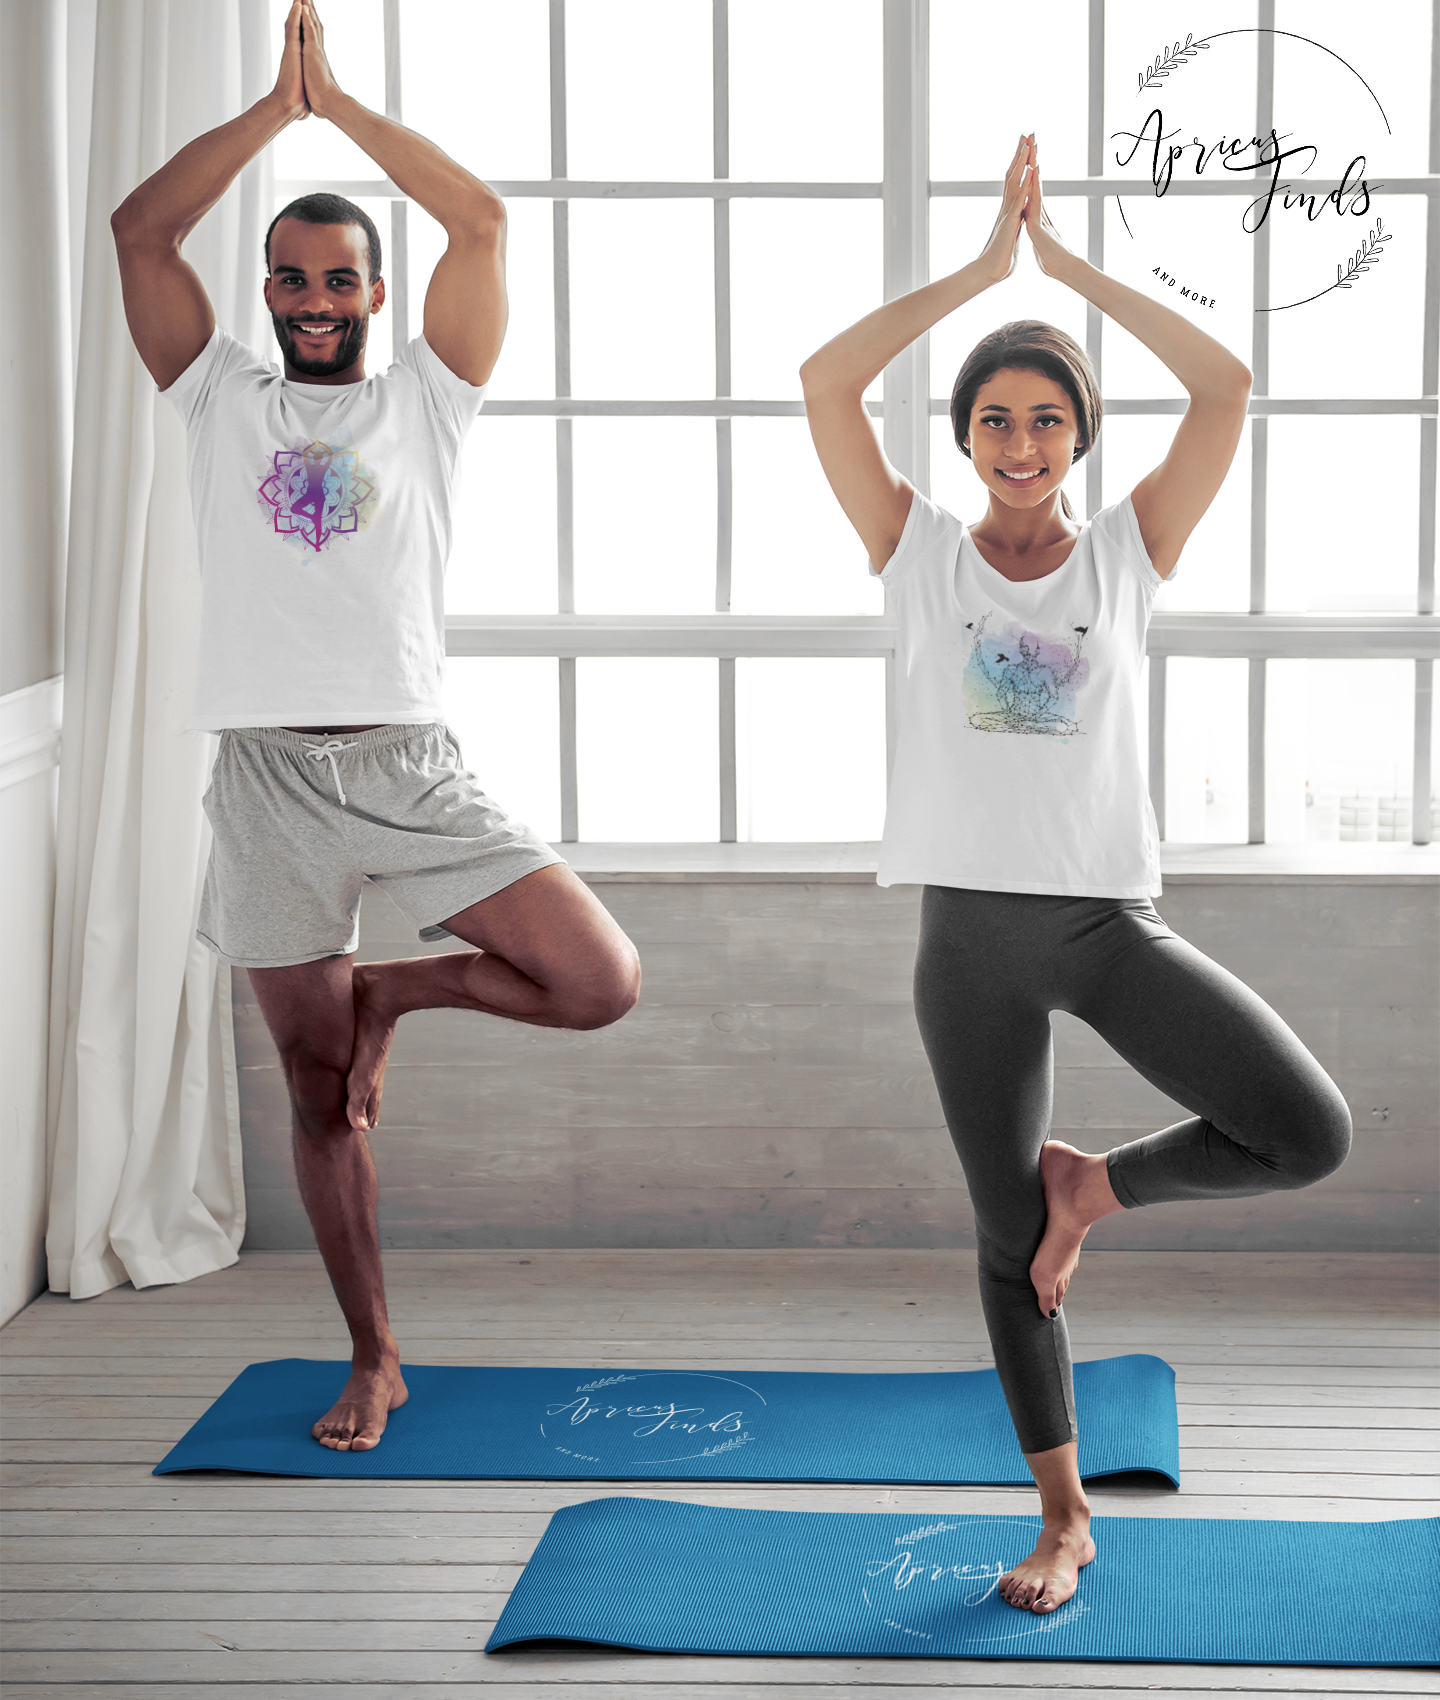 Cobbler's Pose (Baddha Konasana) | Easy yoga poses, Yoga poses, What is yoga